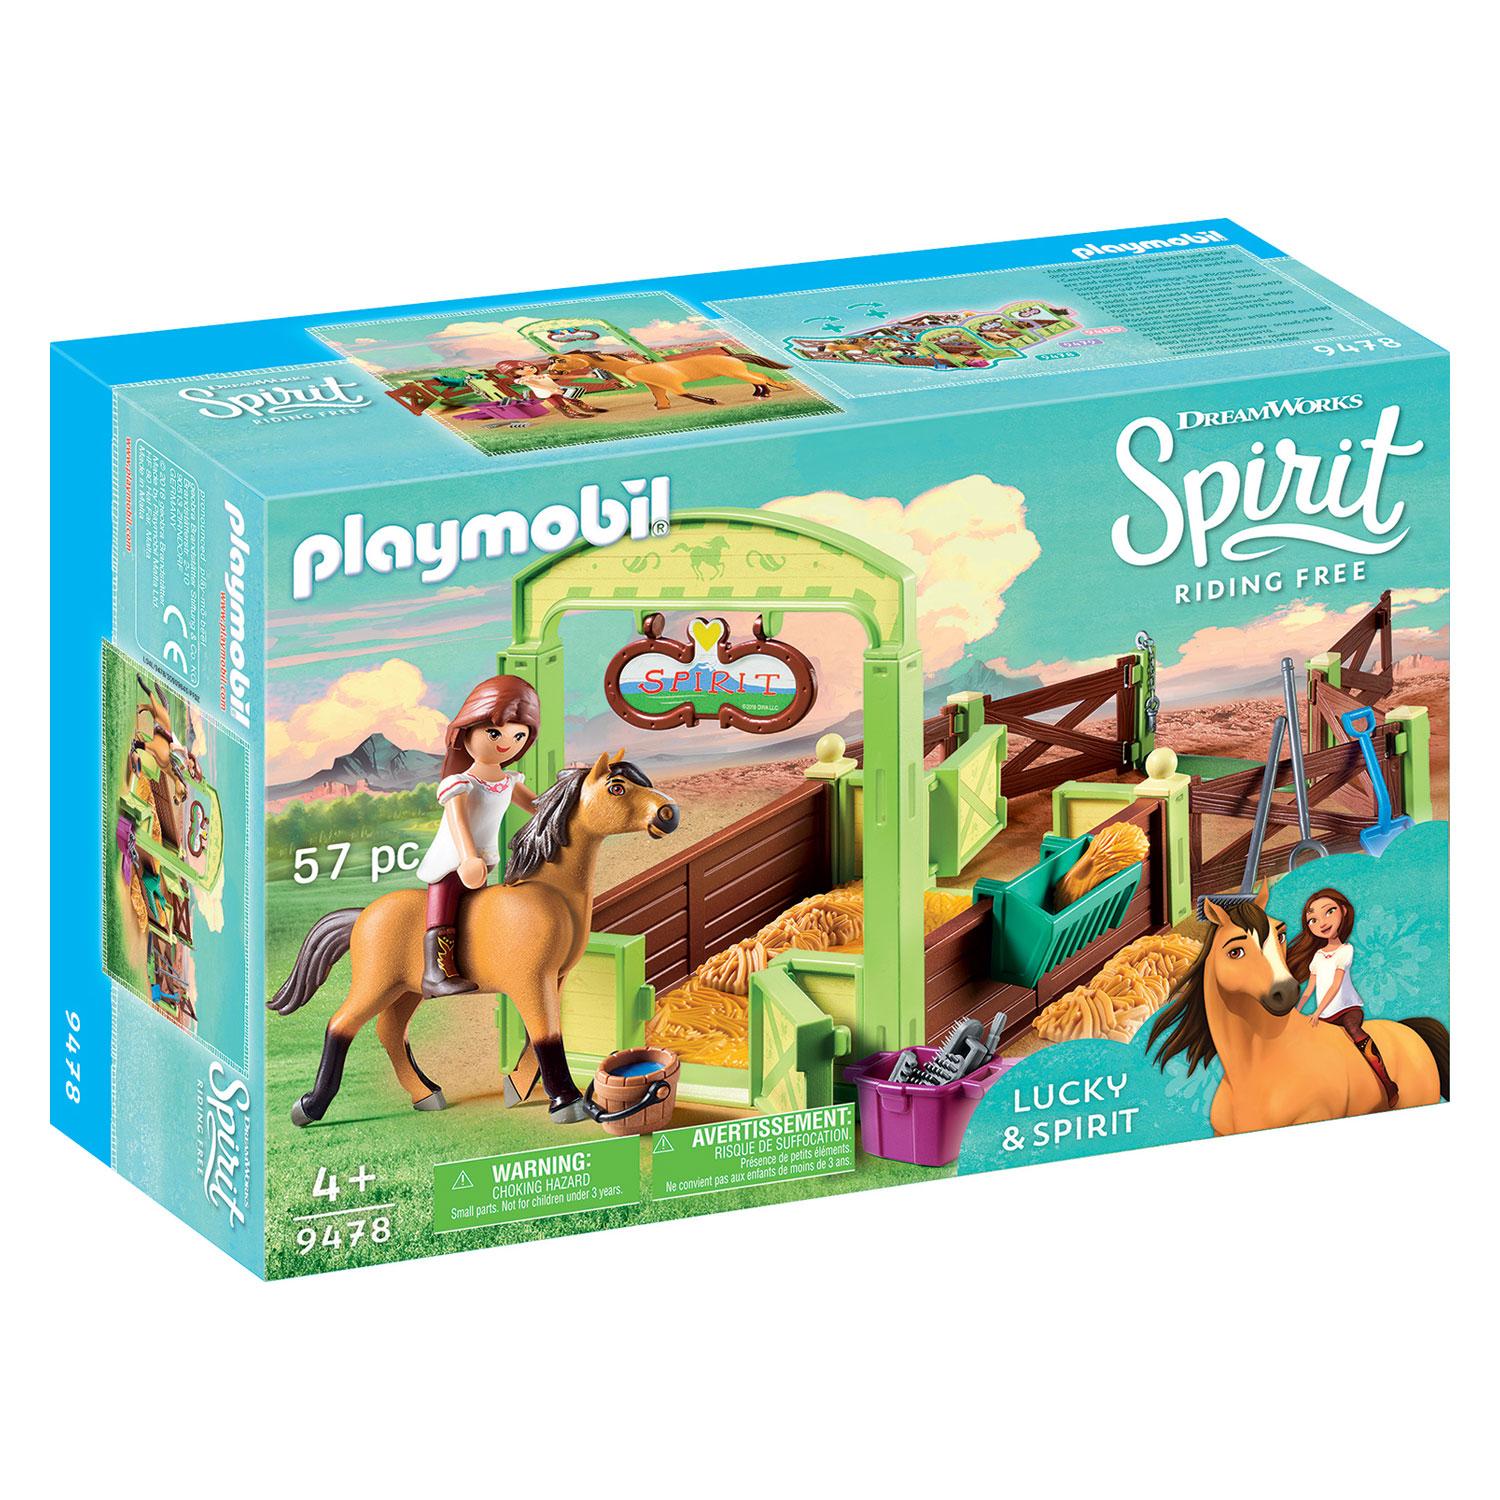 Playmobil 9478 Spirit Au galop en toute liberté: Lucky et spirit avec box